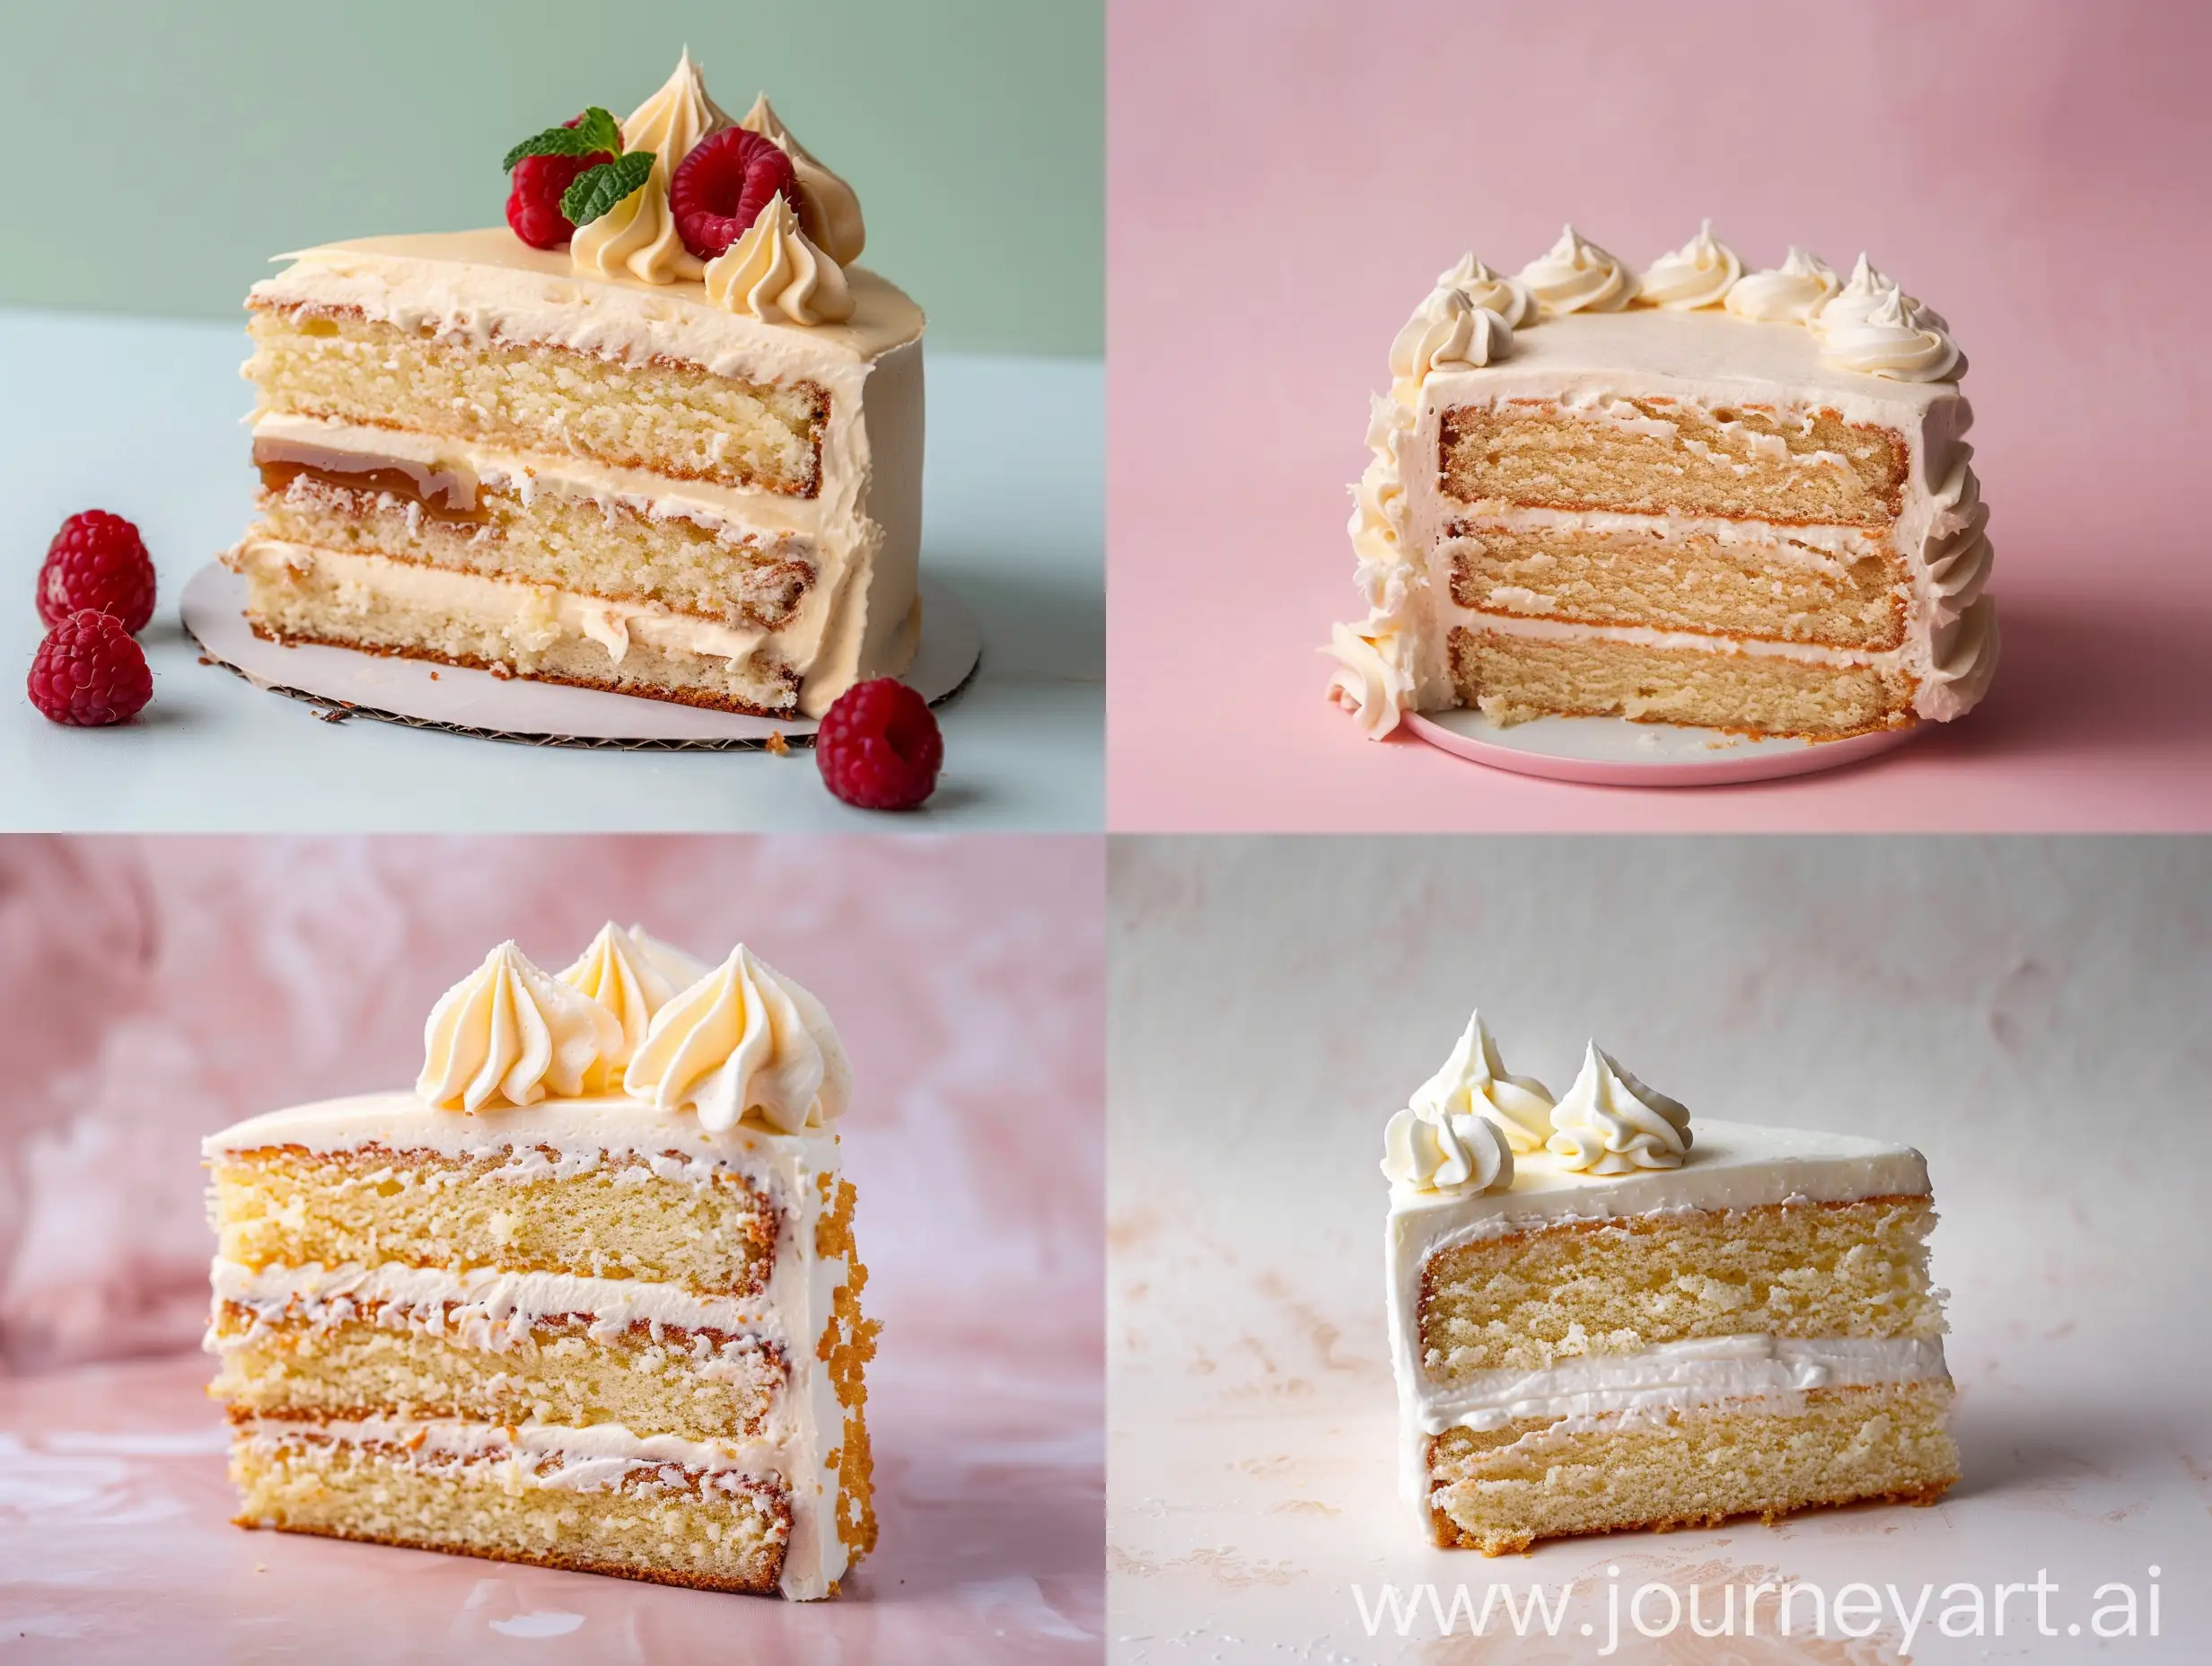 Elegant-Vanilla-Cake-on-Solid-Color-Background-in-Studio-Setting